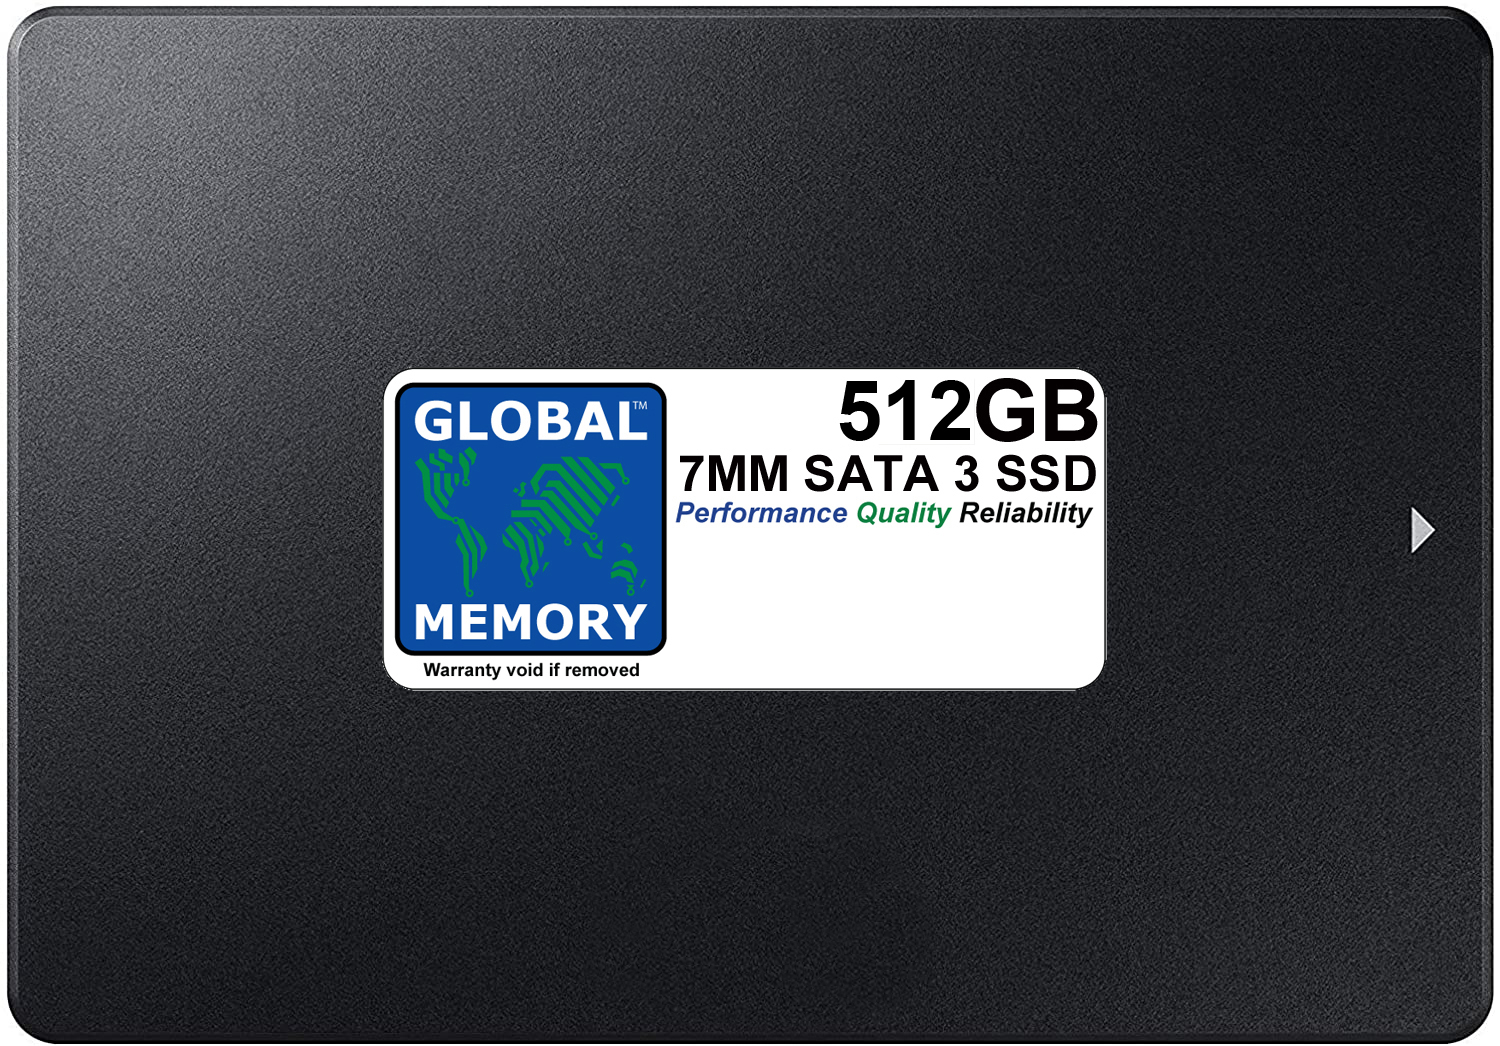 512GB 7mm 2.5" SATA 3 SSD FOR LAPTOPS / DESKTOP PCs / SERVERS / WORKSTATIONS - Click Image to Close